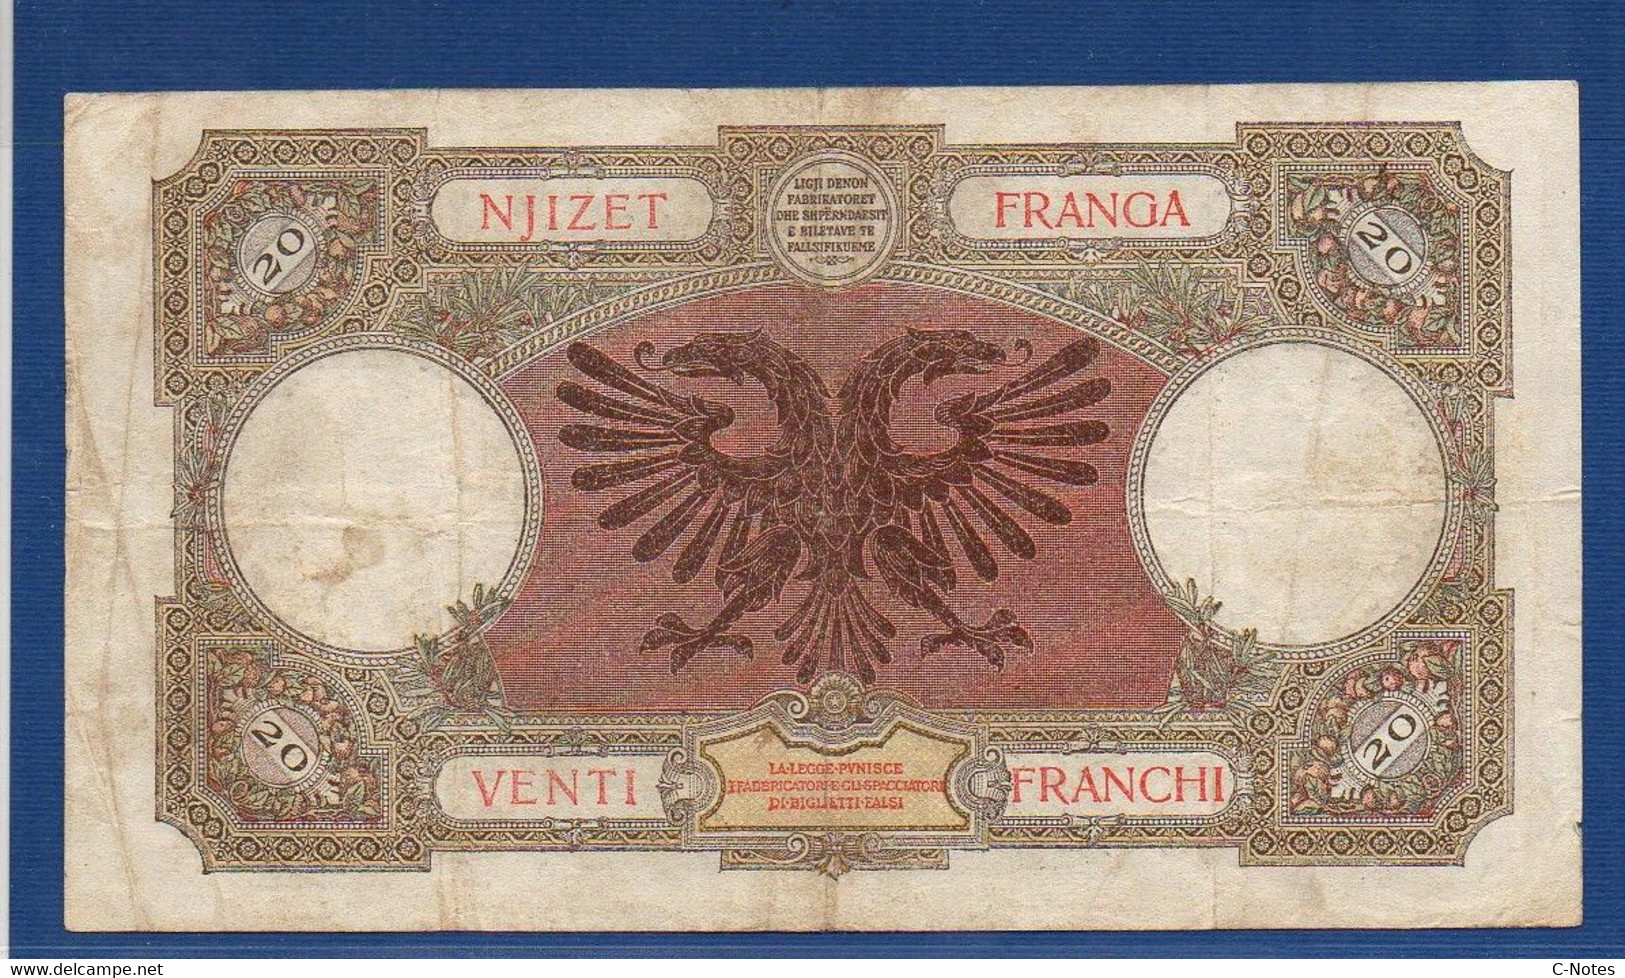 ALBANIA - Banca Nazionale D'Albania - P.7 – 20 Franga 1939 -  F+, Serie L20 5260 - Albanien